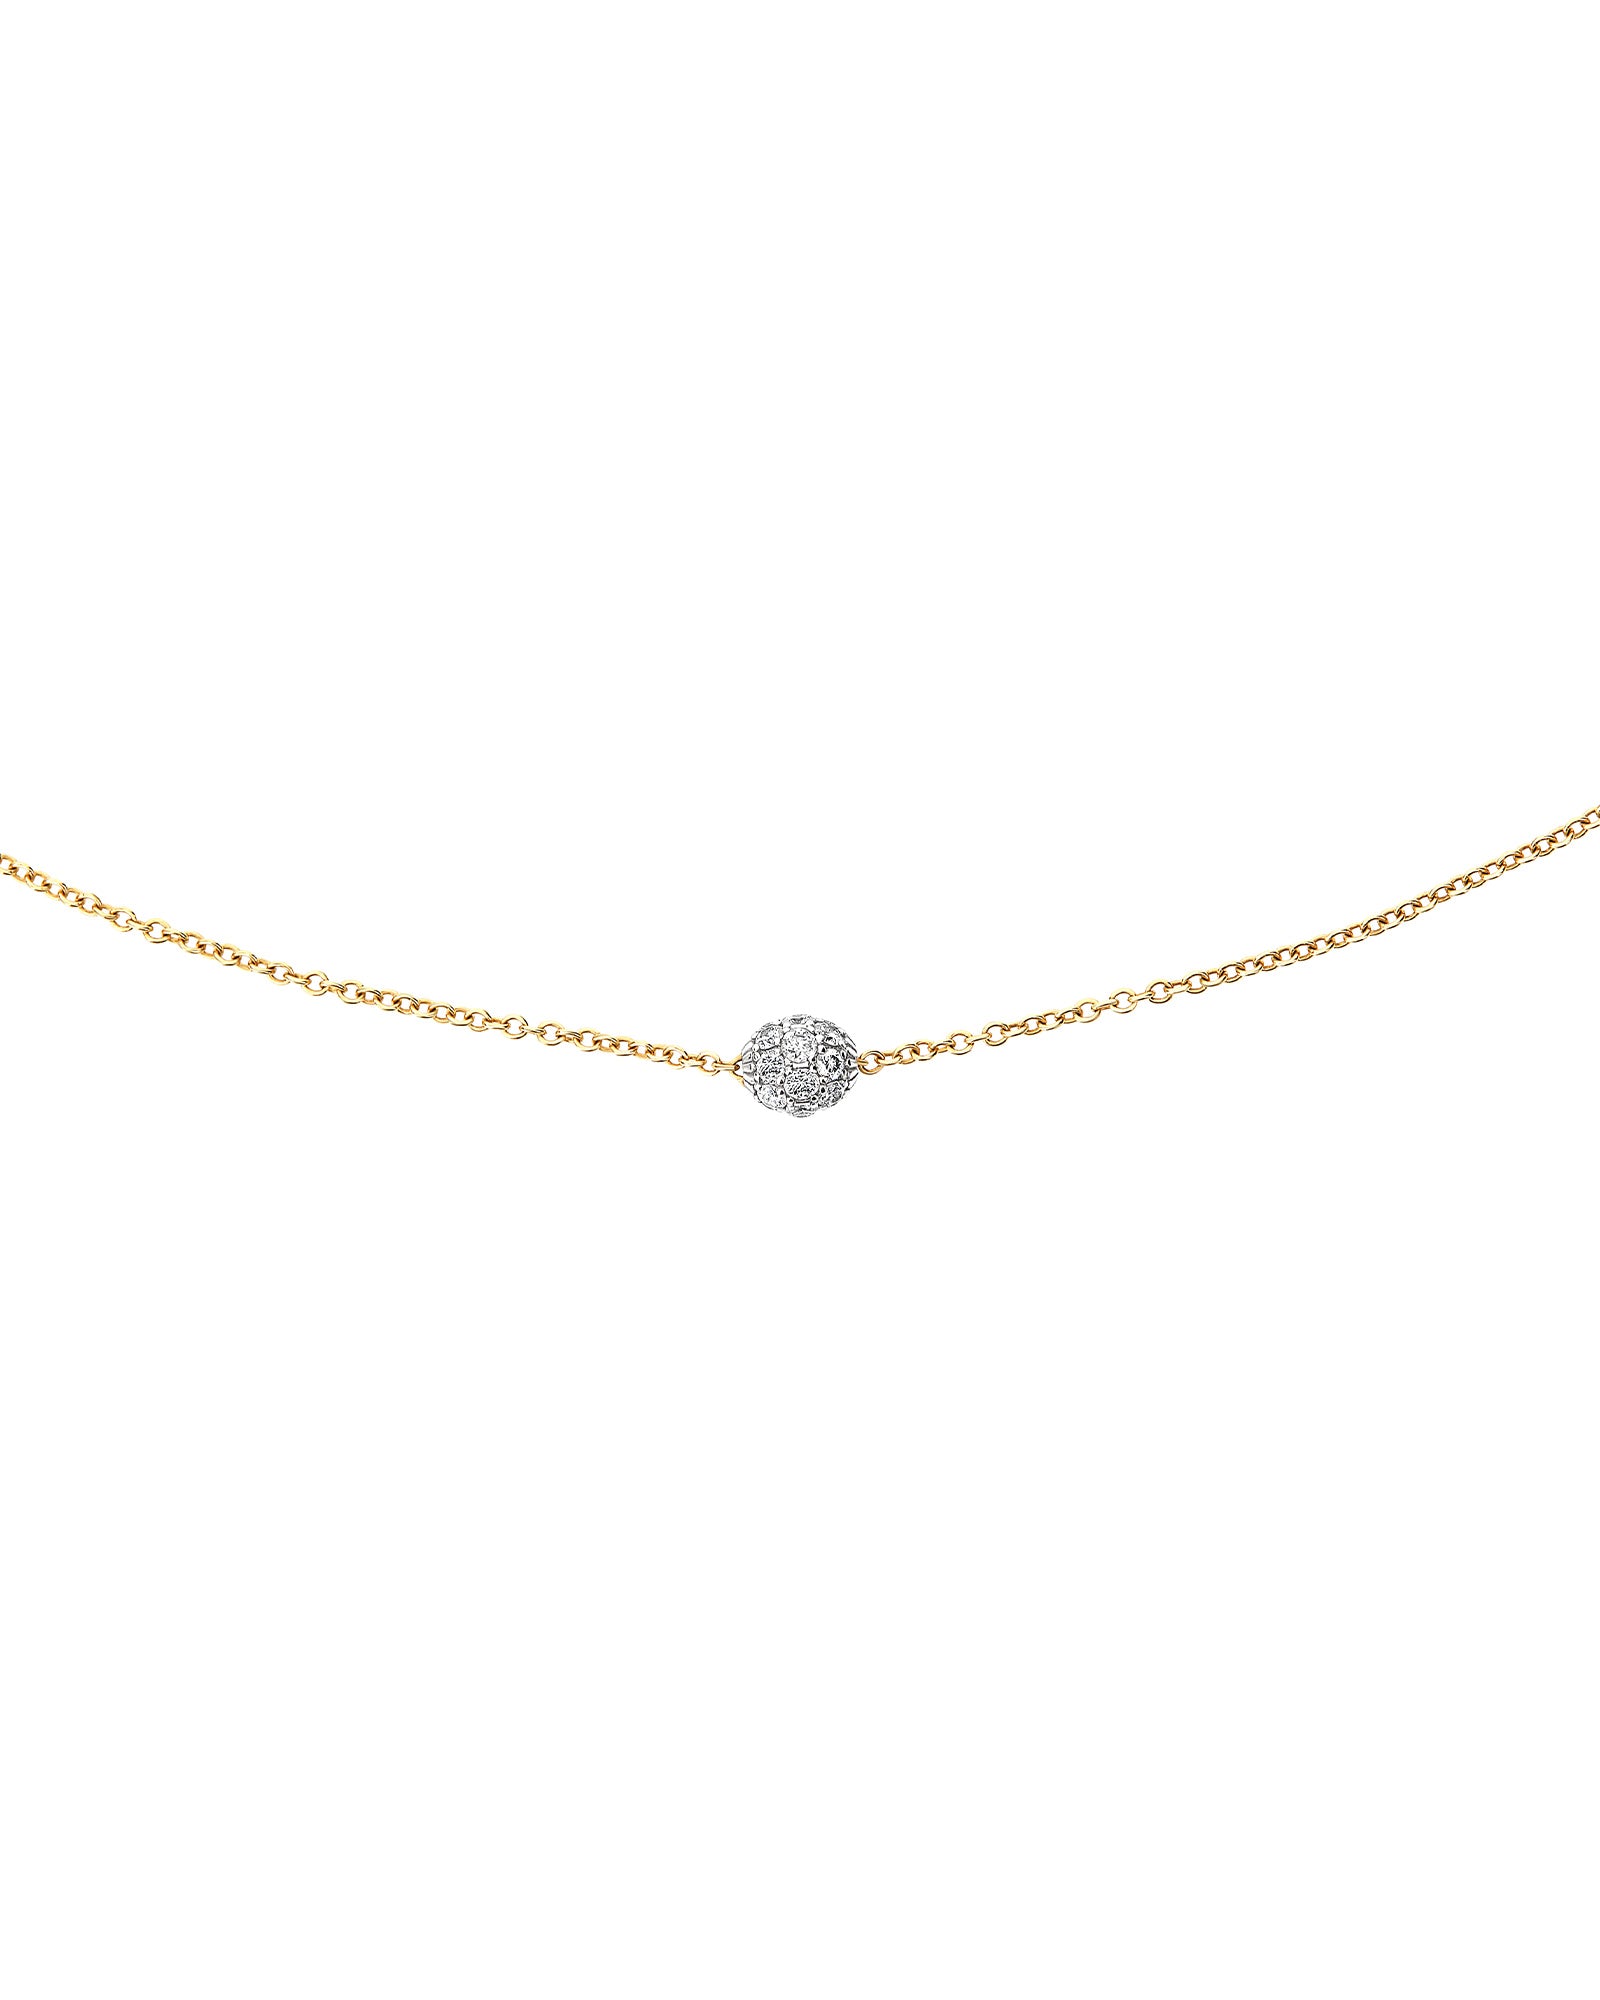 "Élite" Gold and Diamonds Light Point Necklace